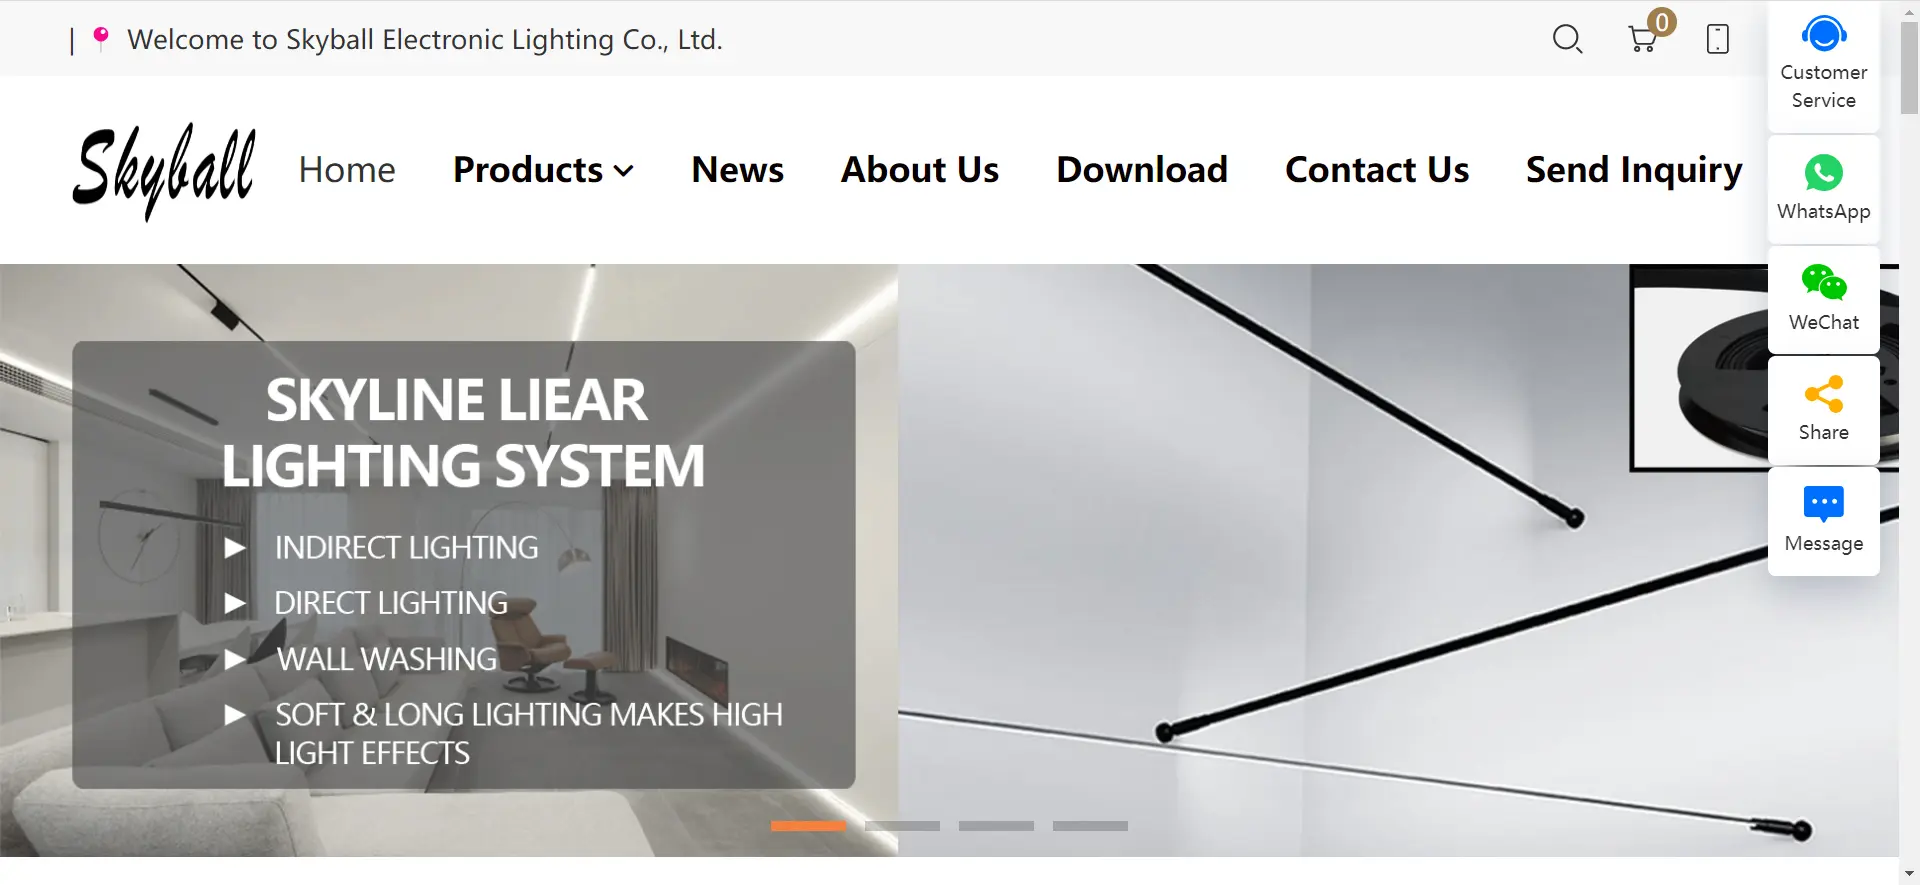 Skyball Electronic Lighting Co. Ltd